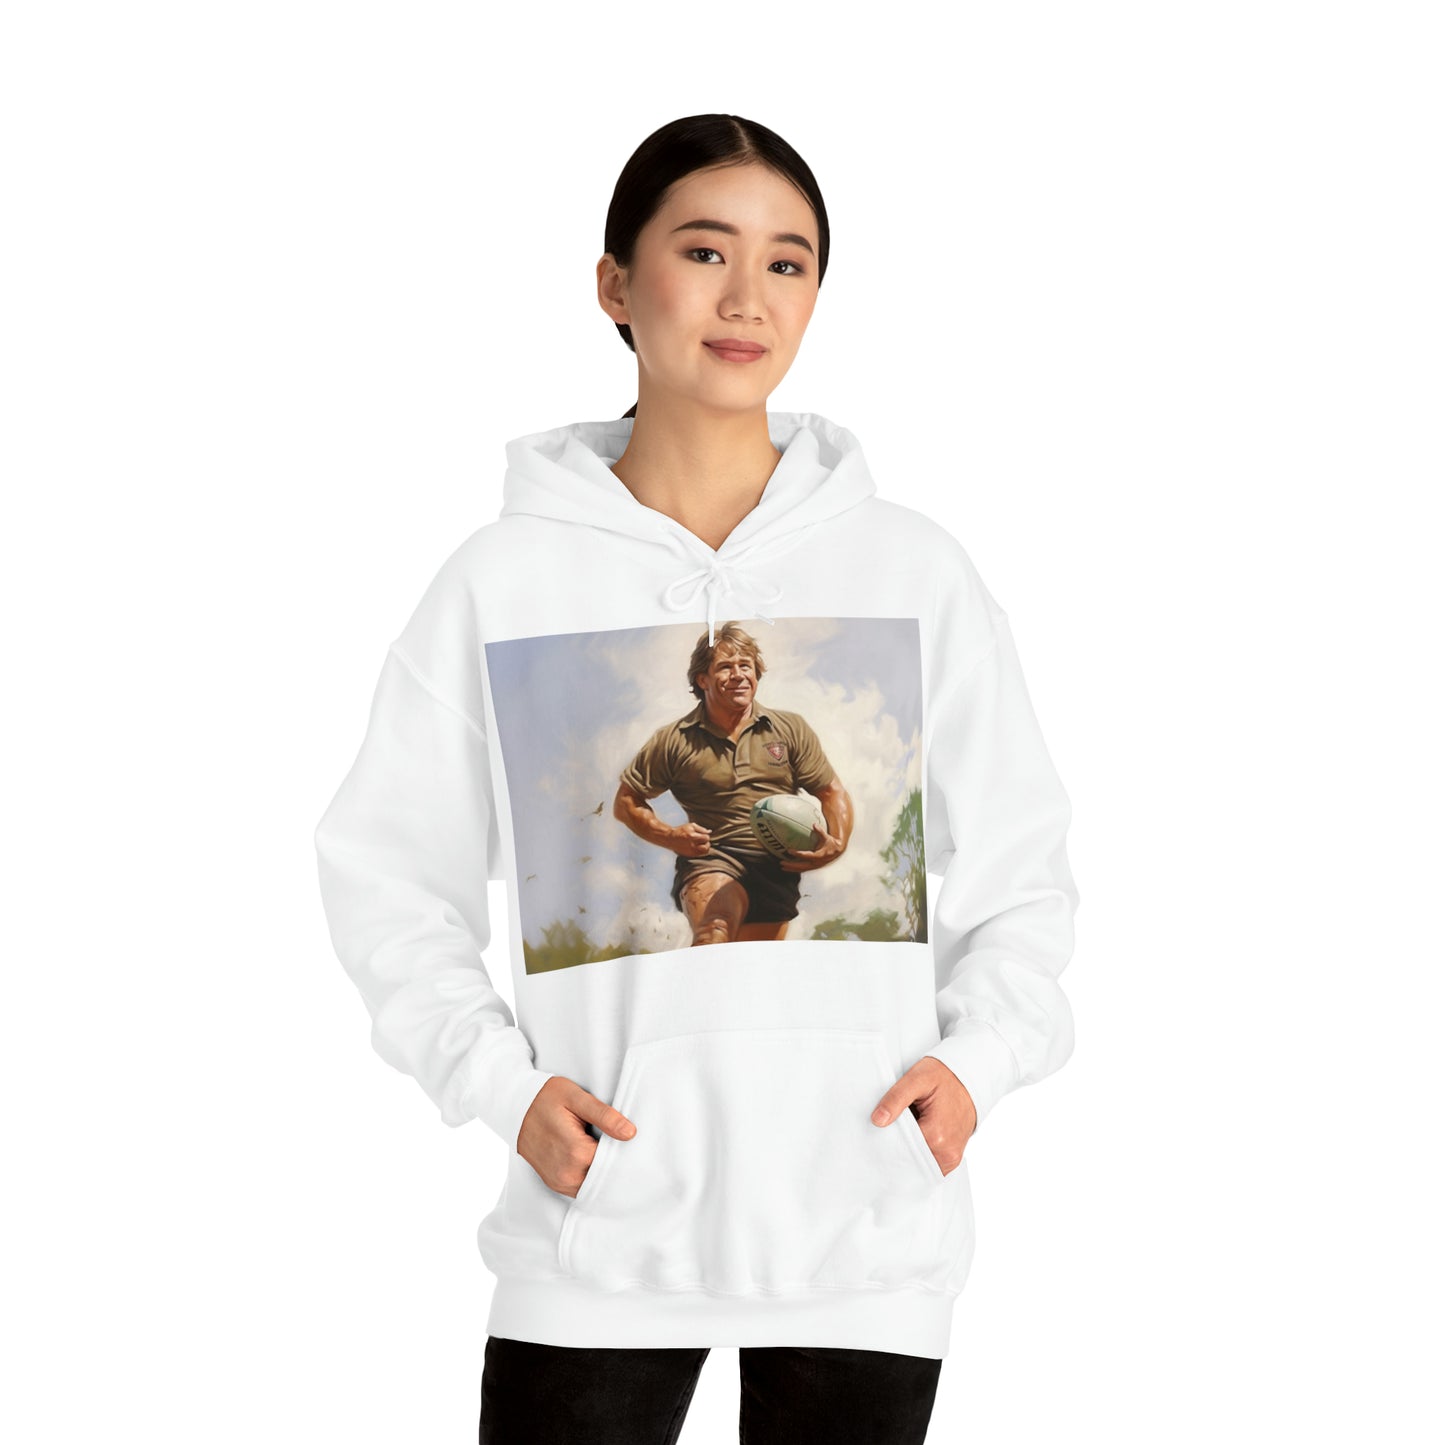 Steve Irwin 2 - light hoodies